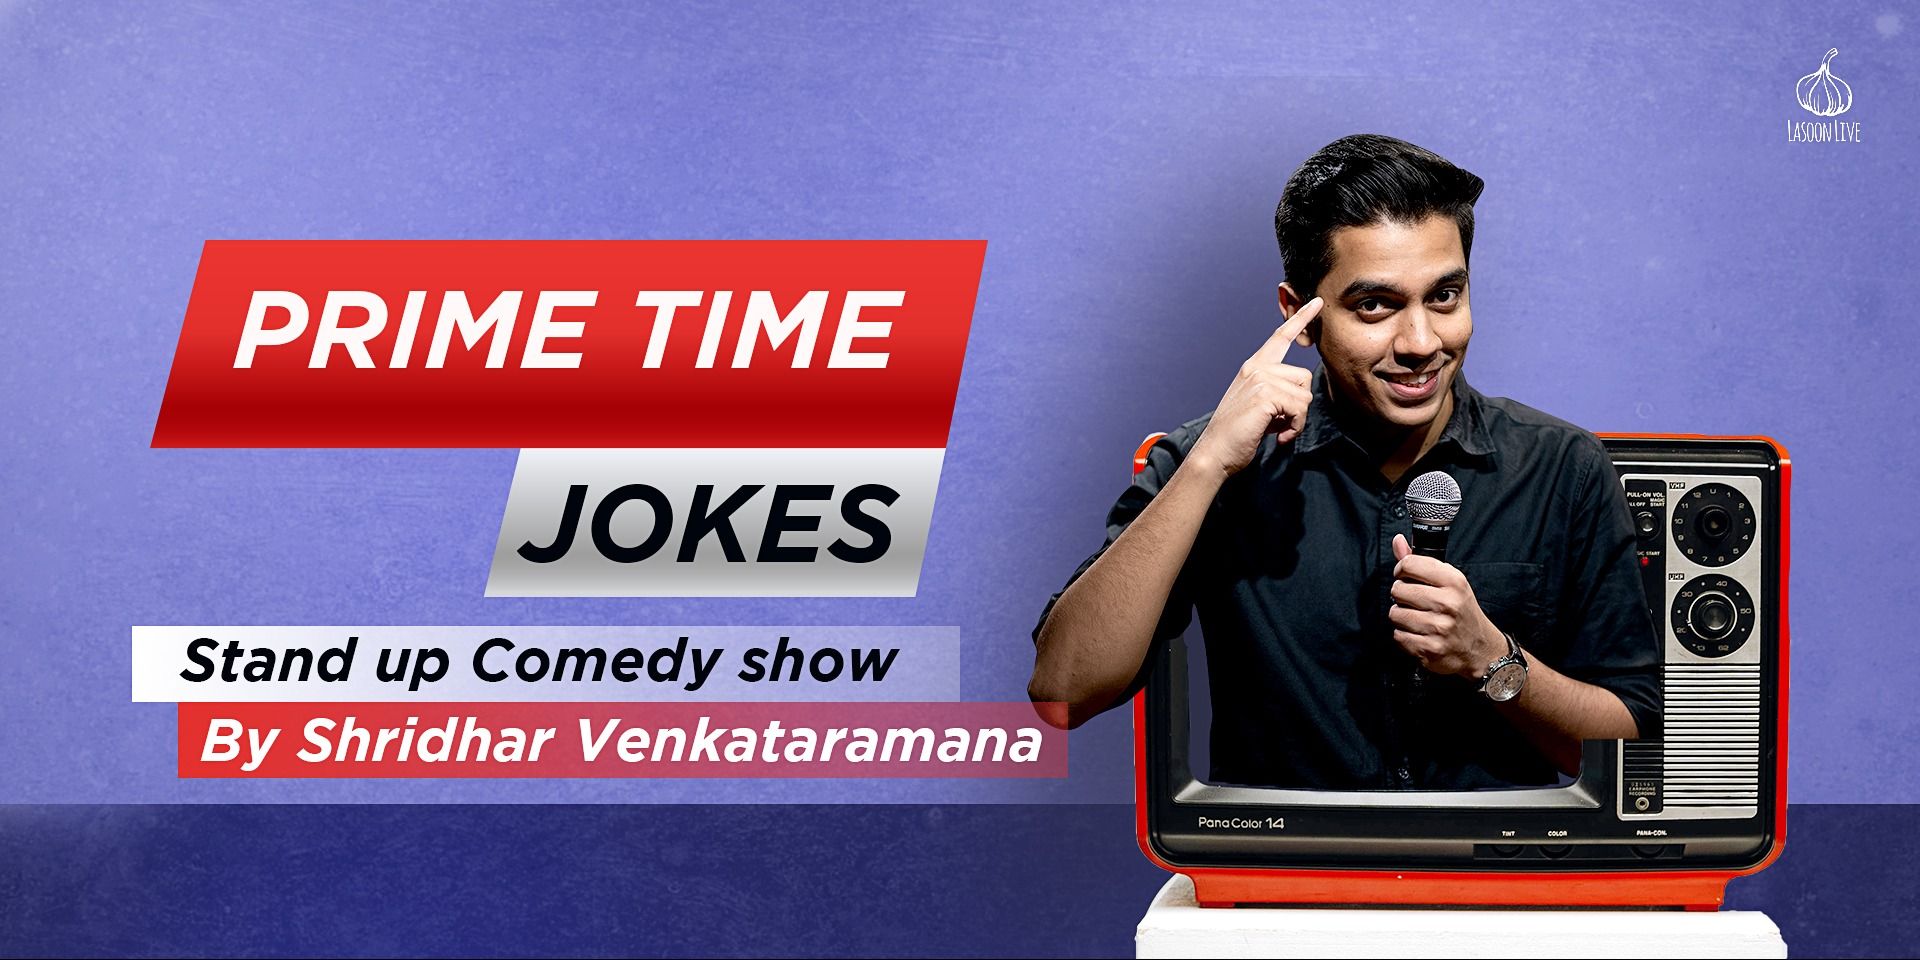 Prime Time Jokes – Shridhar Venkataramana (Comedy) in Pune